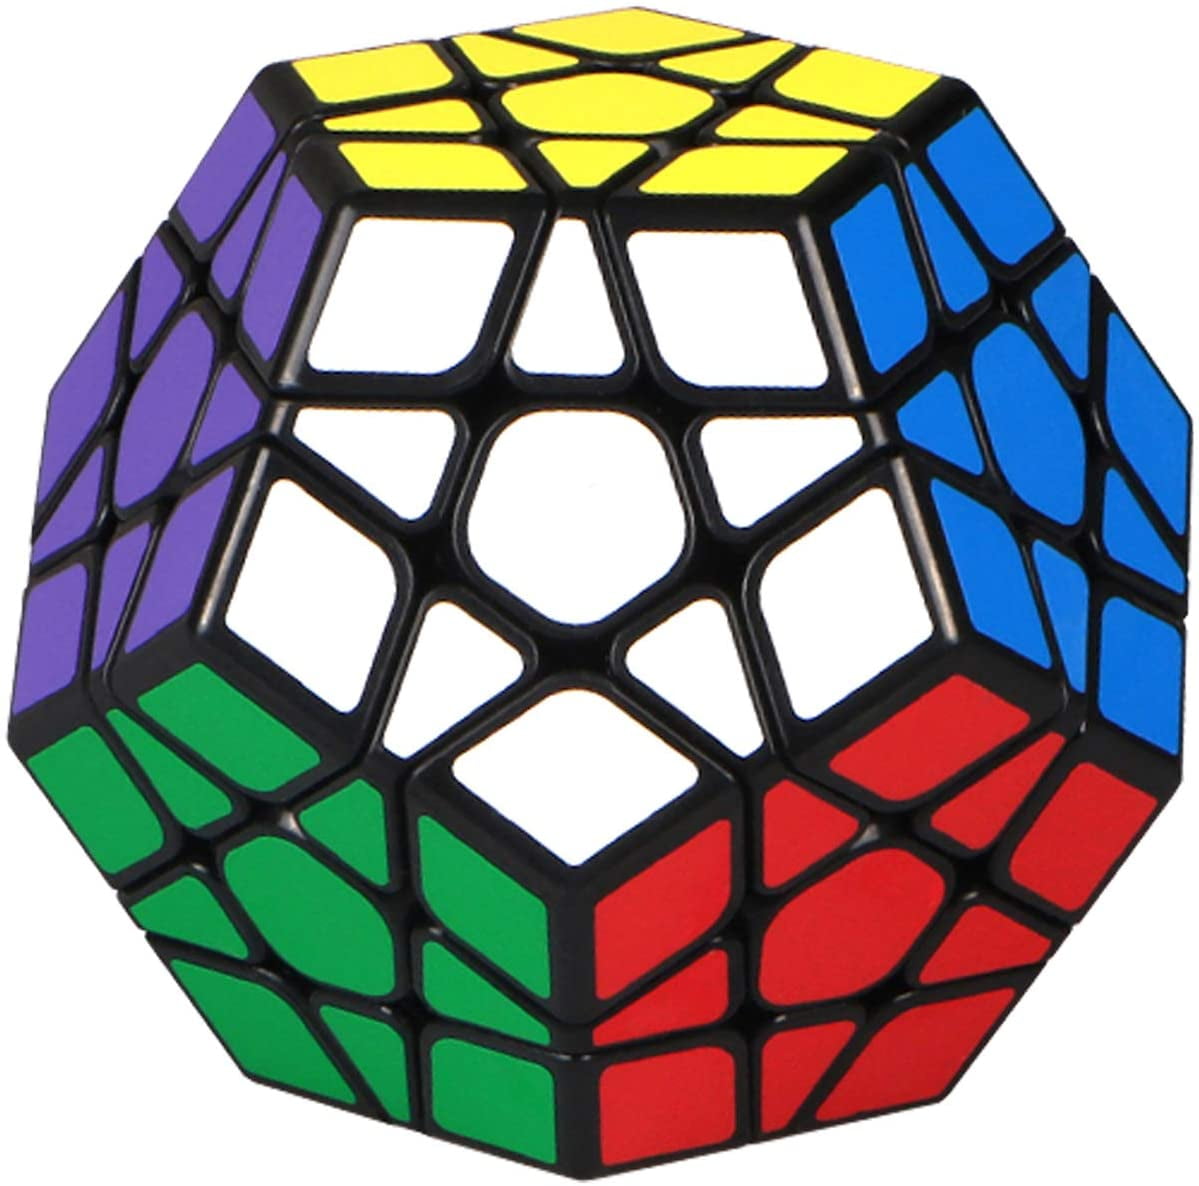 D-FantiX Shengshou Megaminx Speed Cube 3x3 Dodecahedron Puzzle Toy Black 